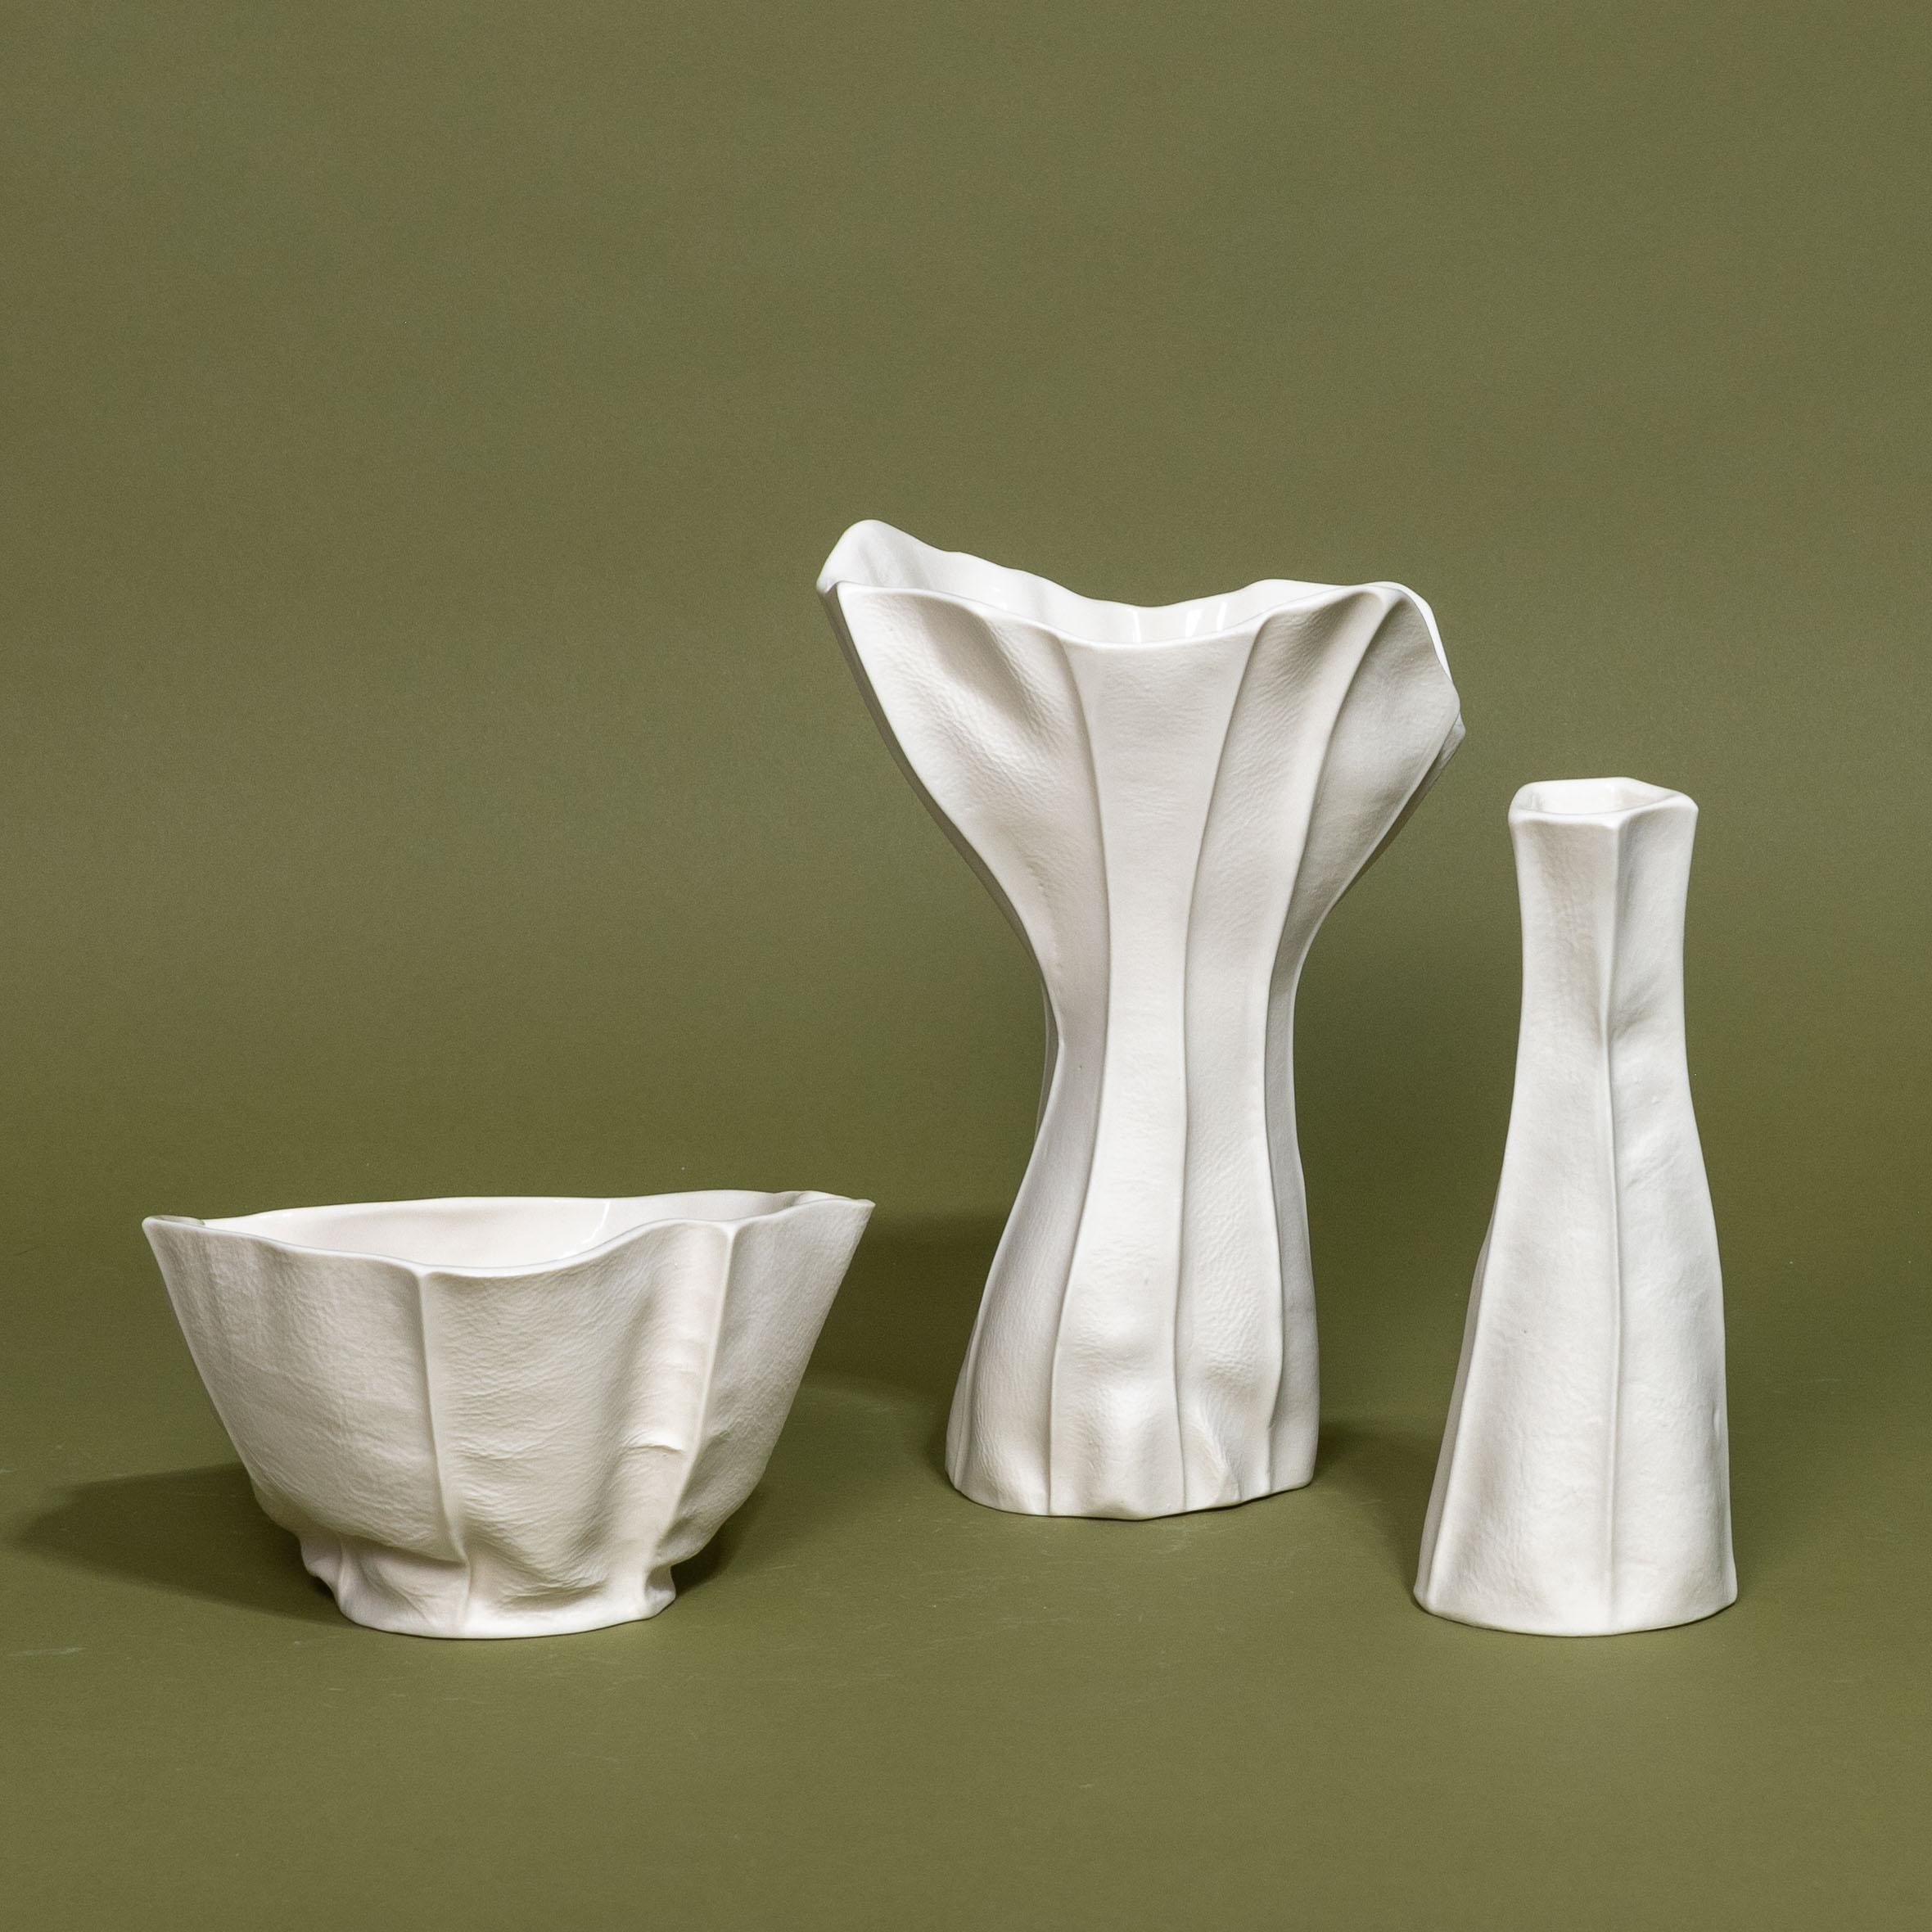 American In-Stock, Set of 3 White Ceramic Vases & Bowl, Luft Tanaka, Porcelain, Organic